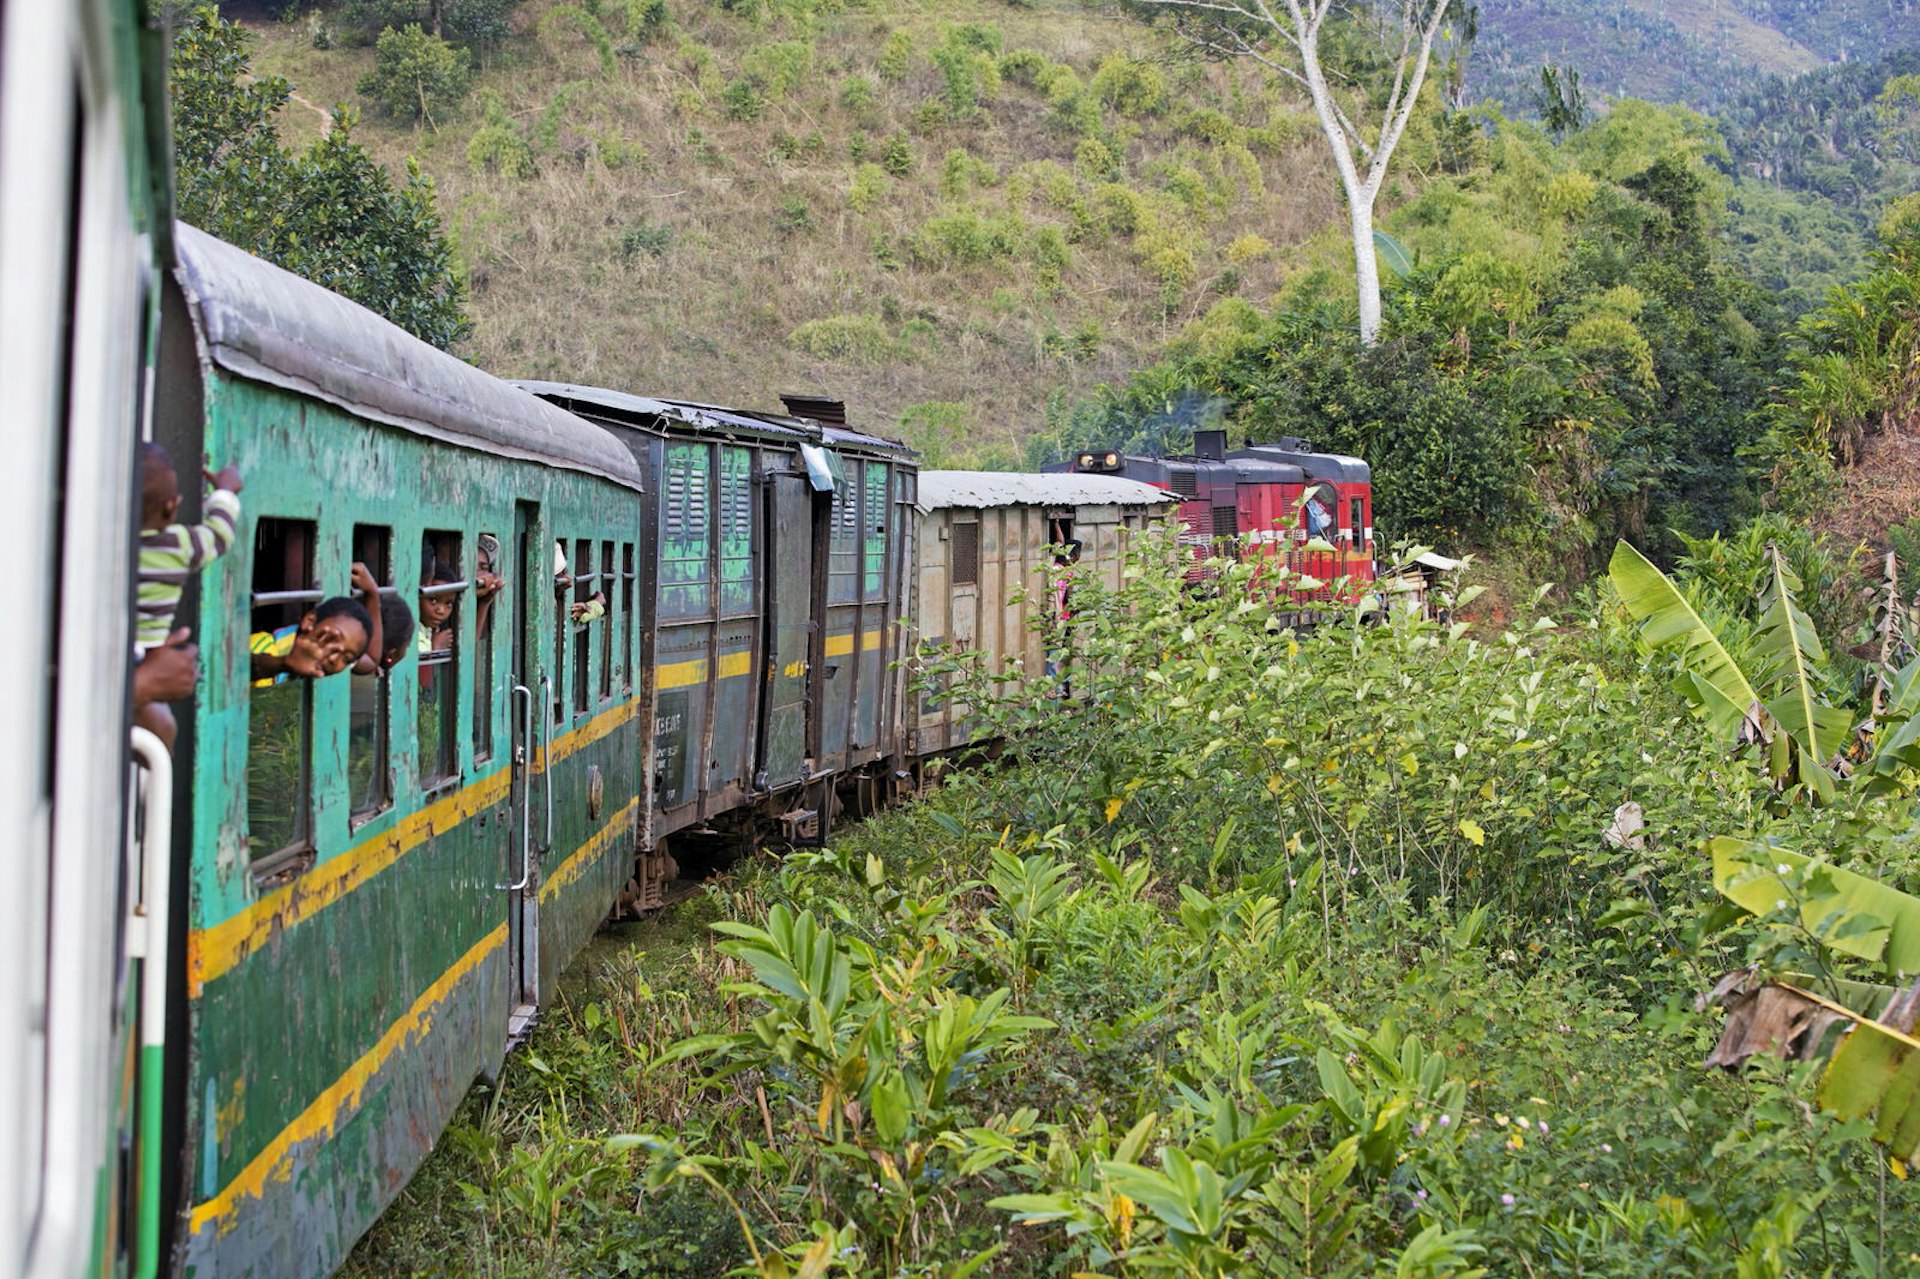 The Fianarantsoa-Côte Est (FCE) railway trundling east from Fianarantsoa towards the Indian Ocean coast © Arterra/UIG/Getty Images